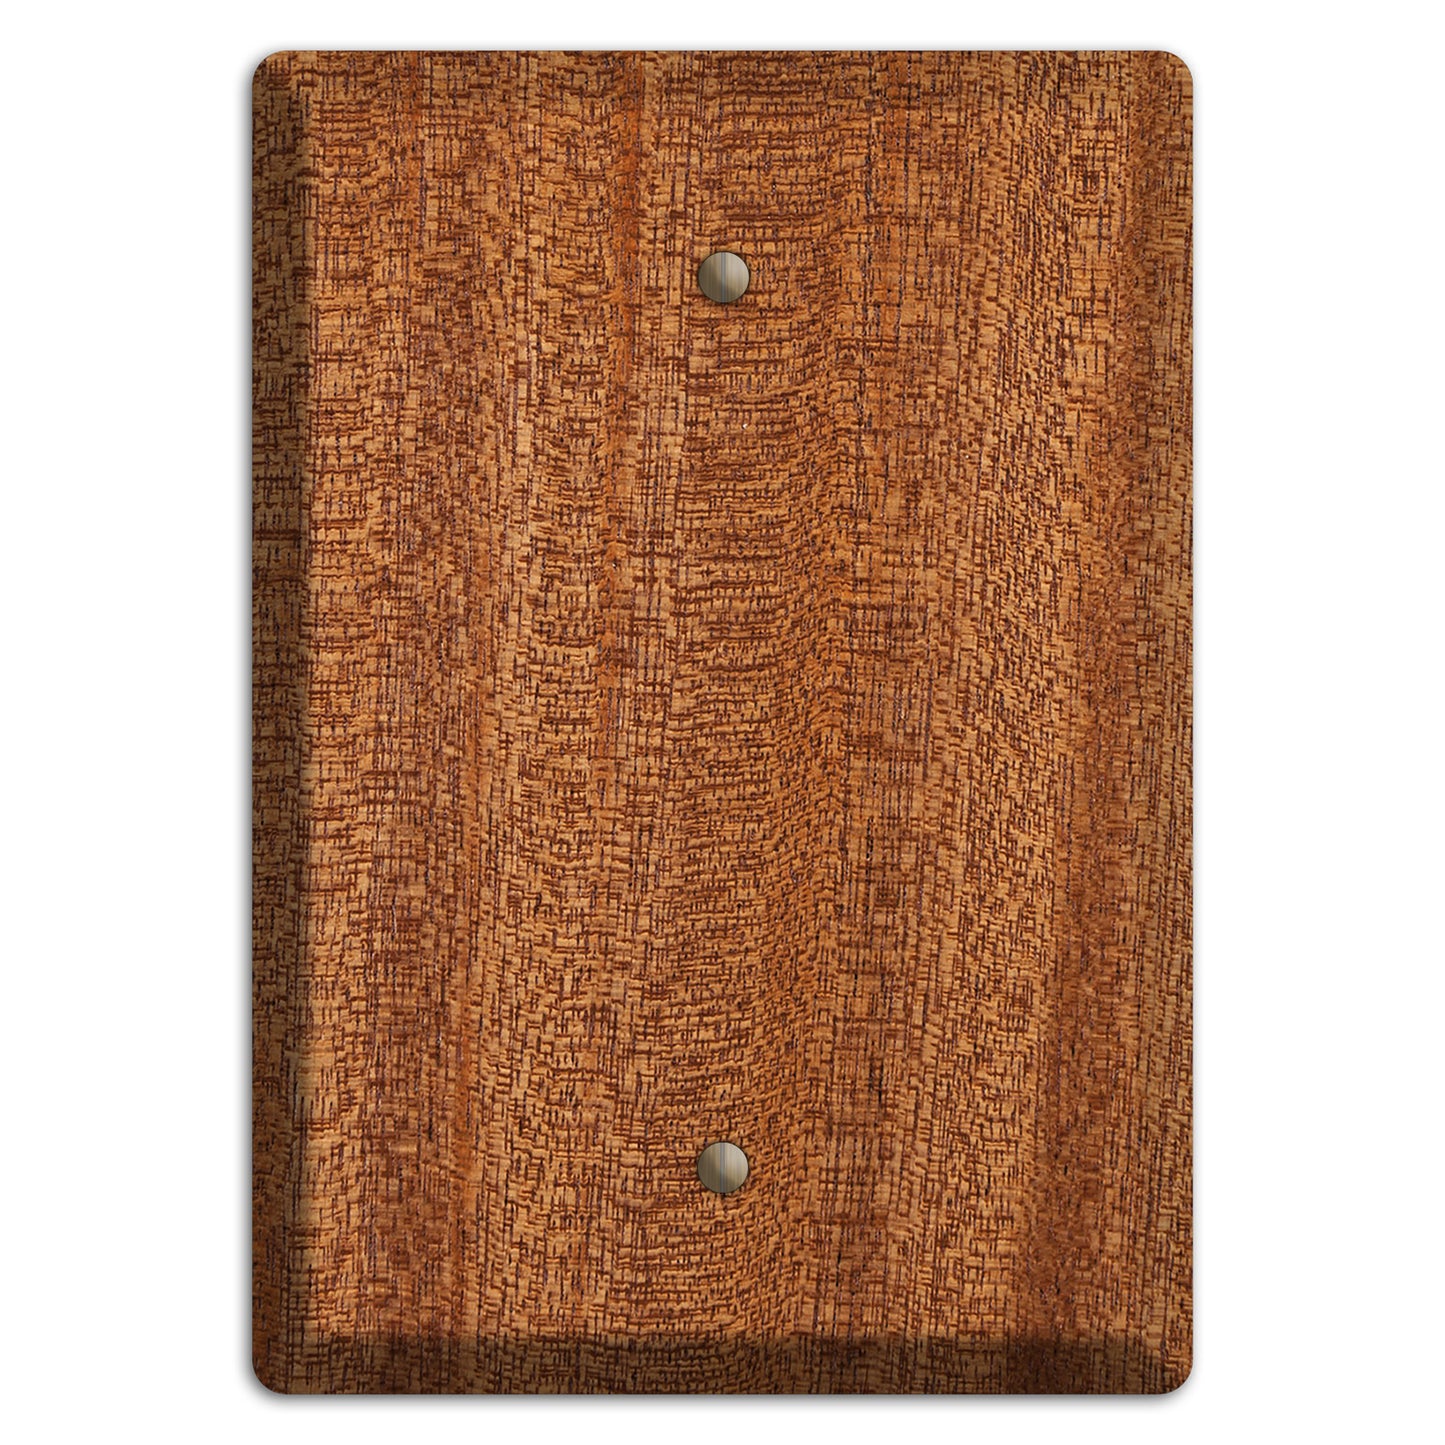 Mahogany Wood Single Blank Cover Plate